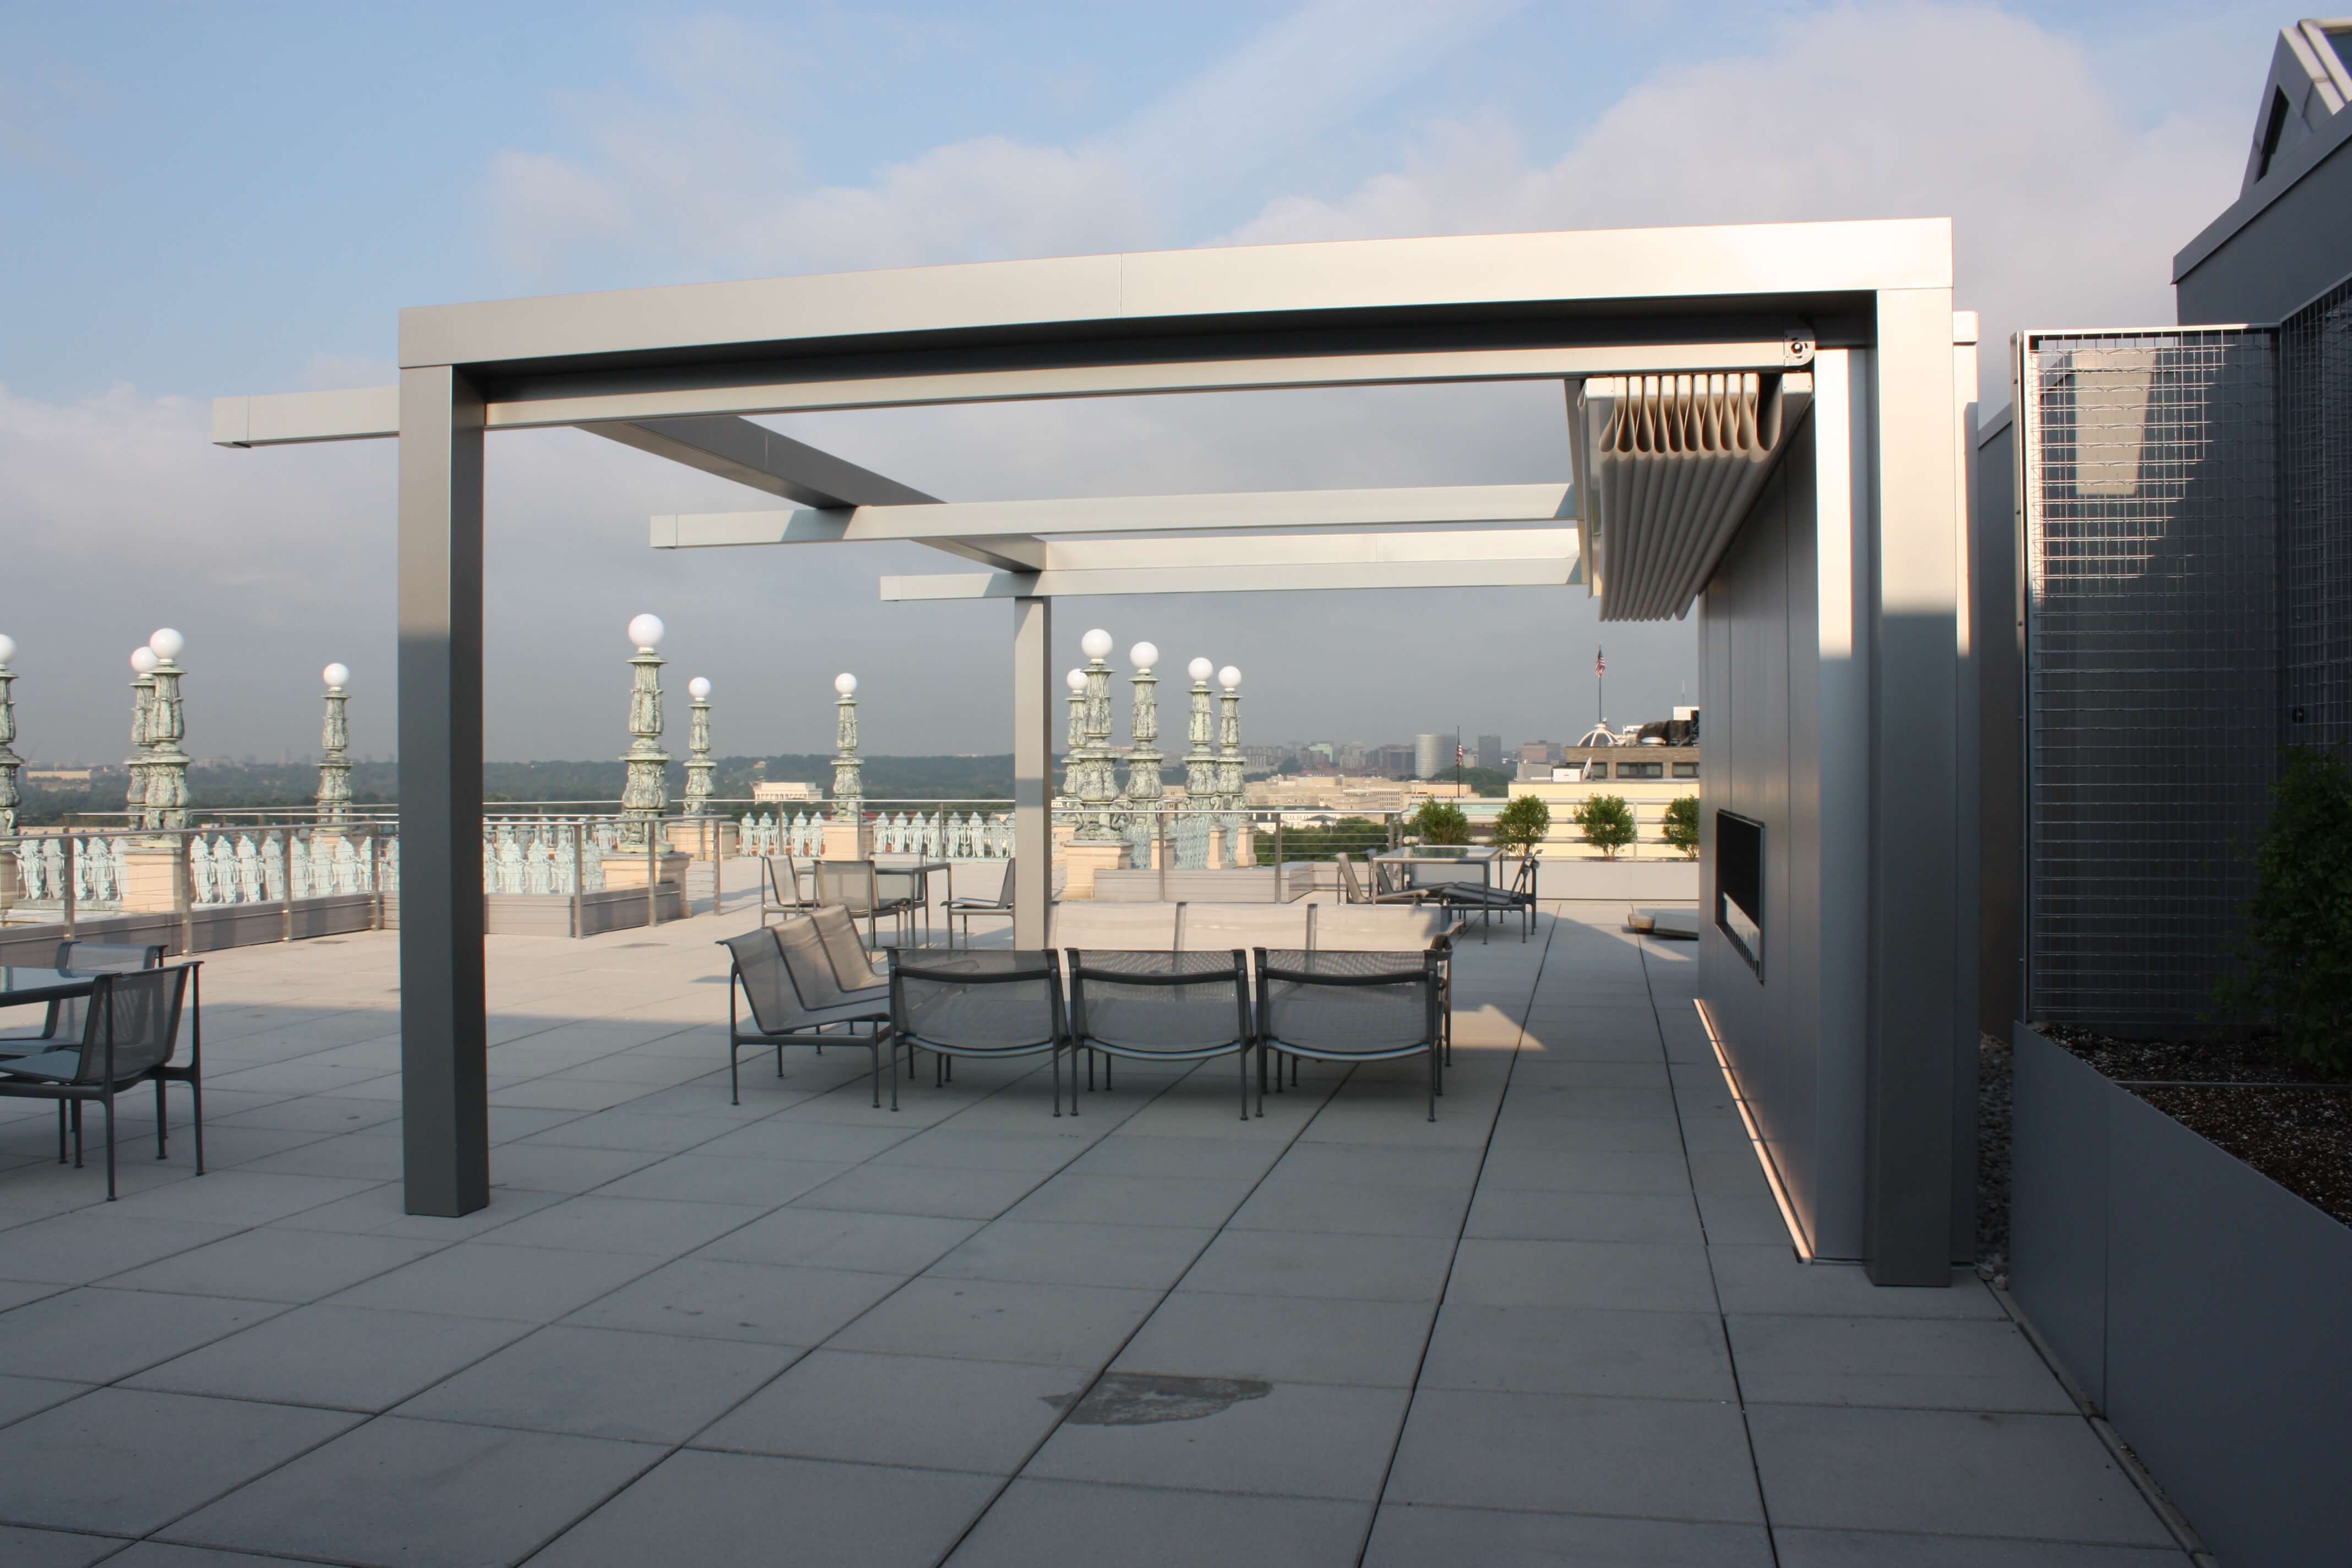 Rimini retractable commercial grade patio deck cover pergola system